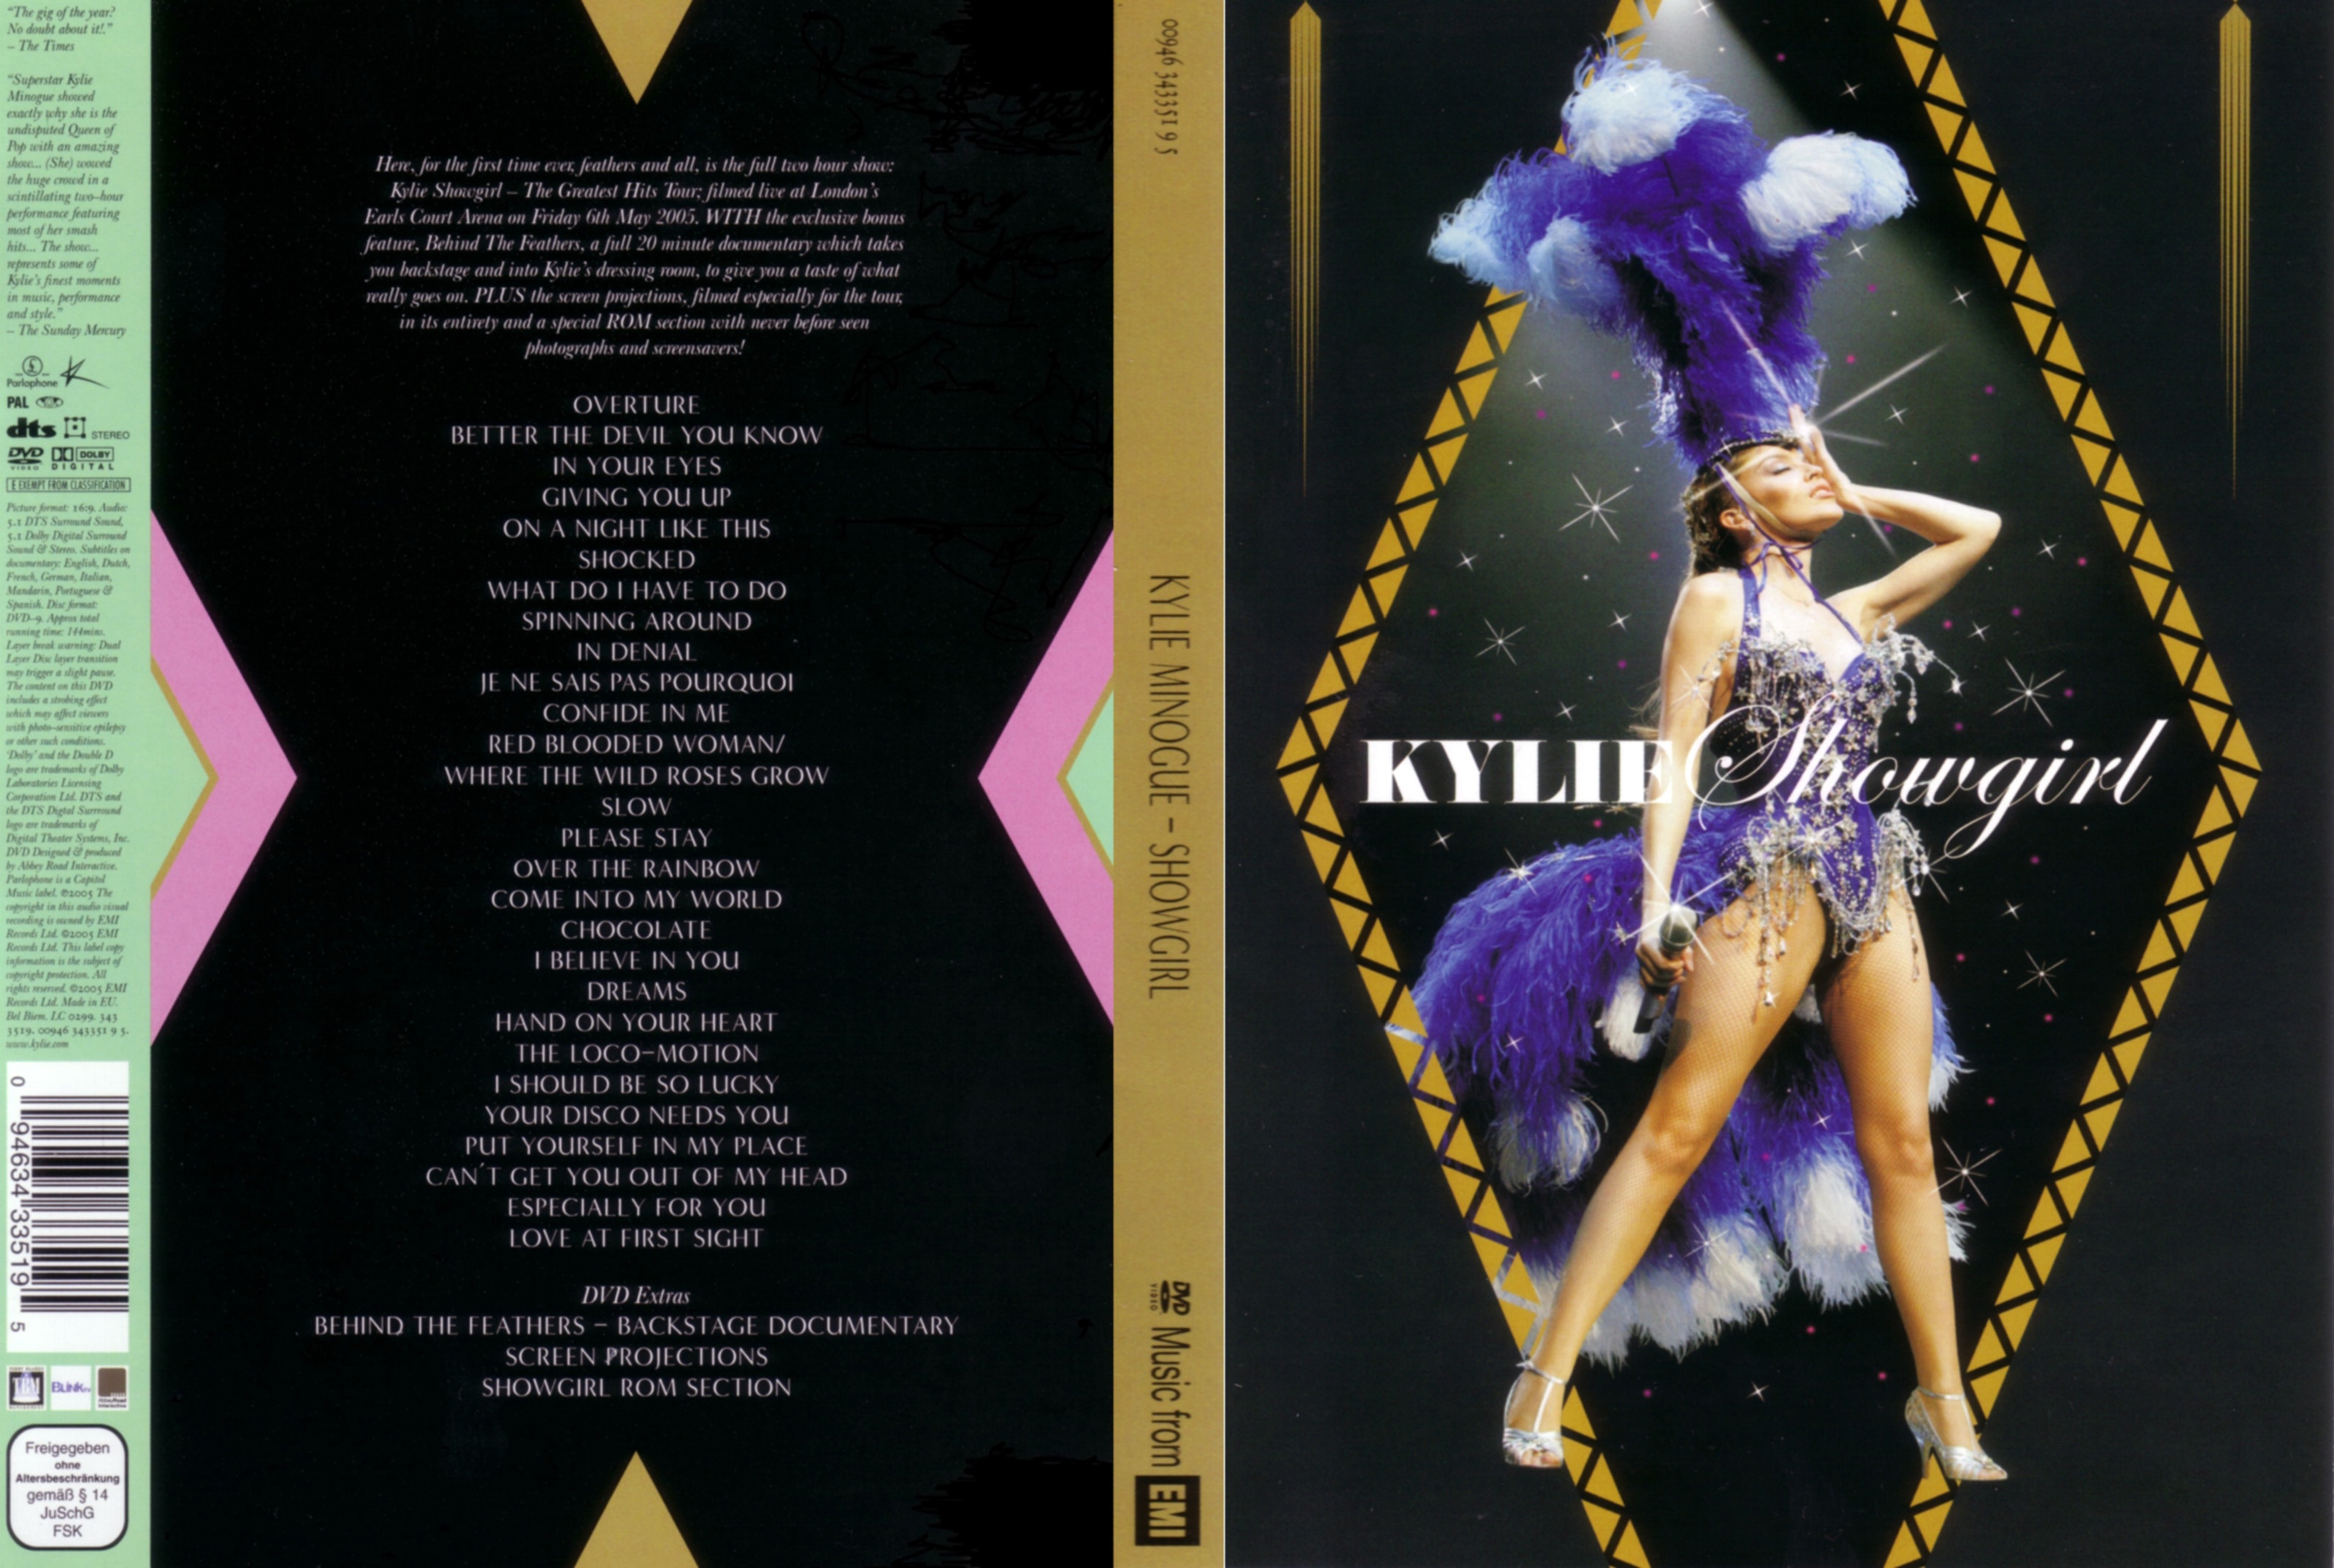 Jaquette DVD Kylie Minogue showgirl